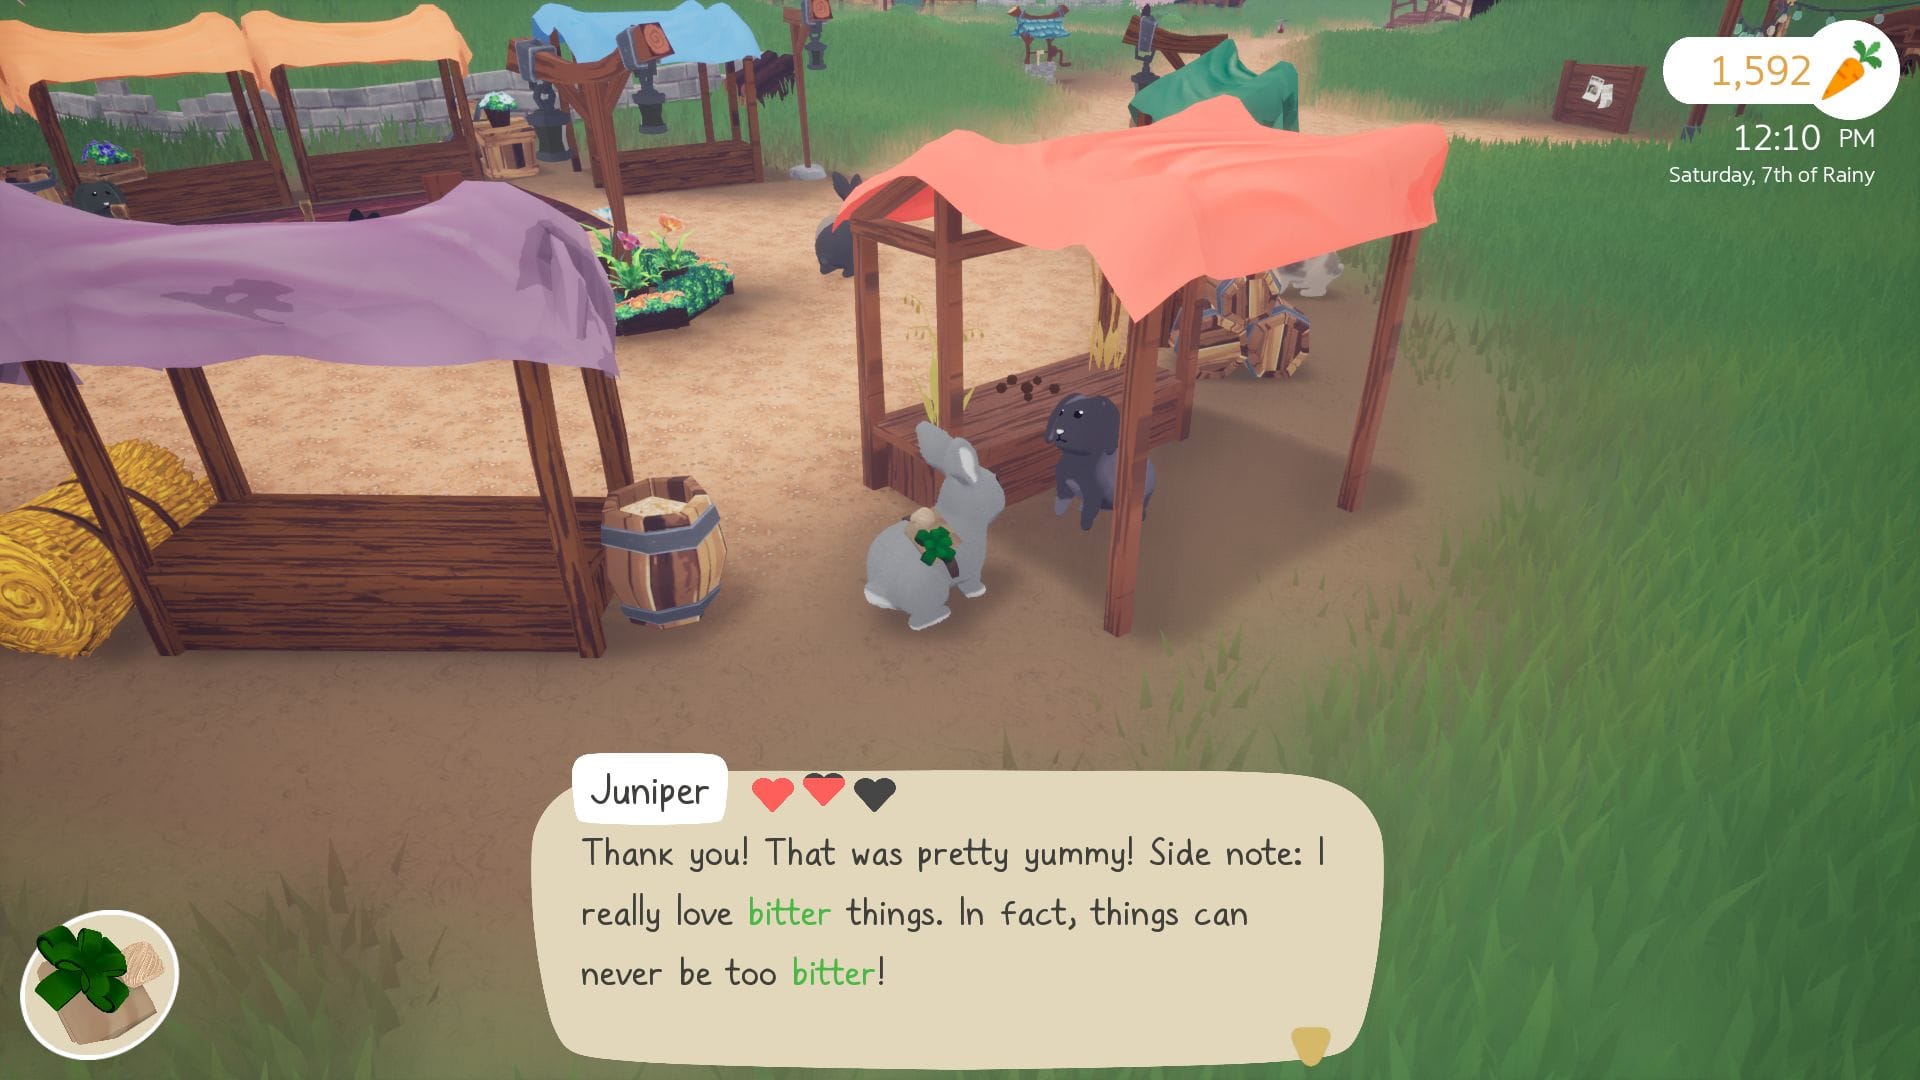 Screenshot from the game. The player talks to Juniper, a black merchant rabbit.